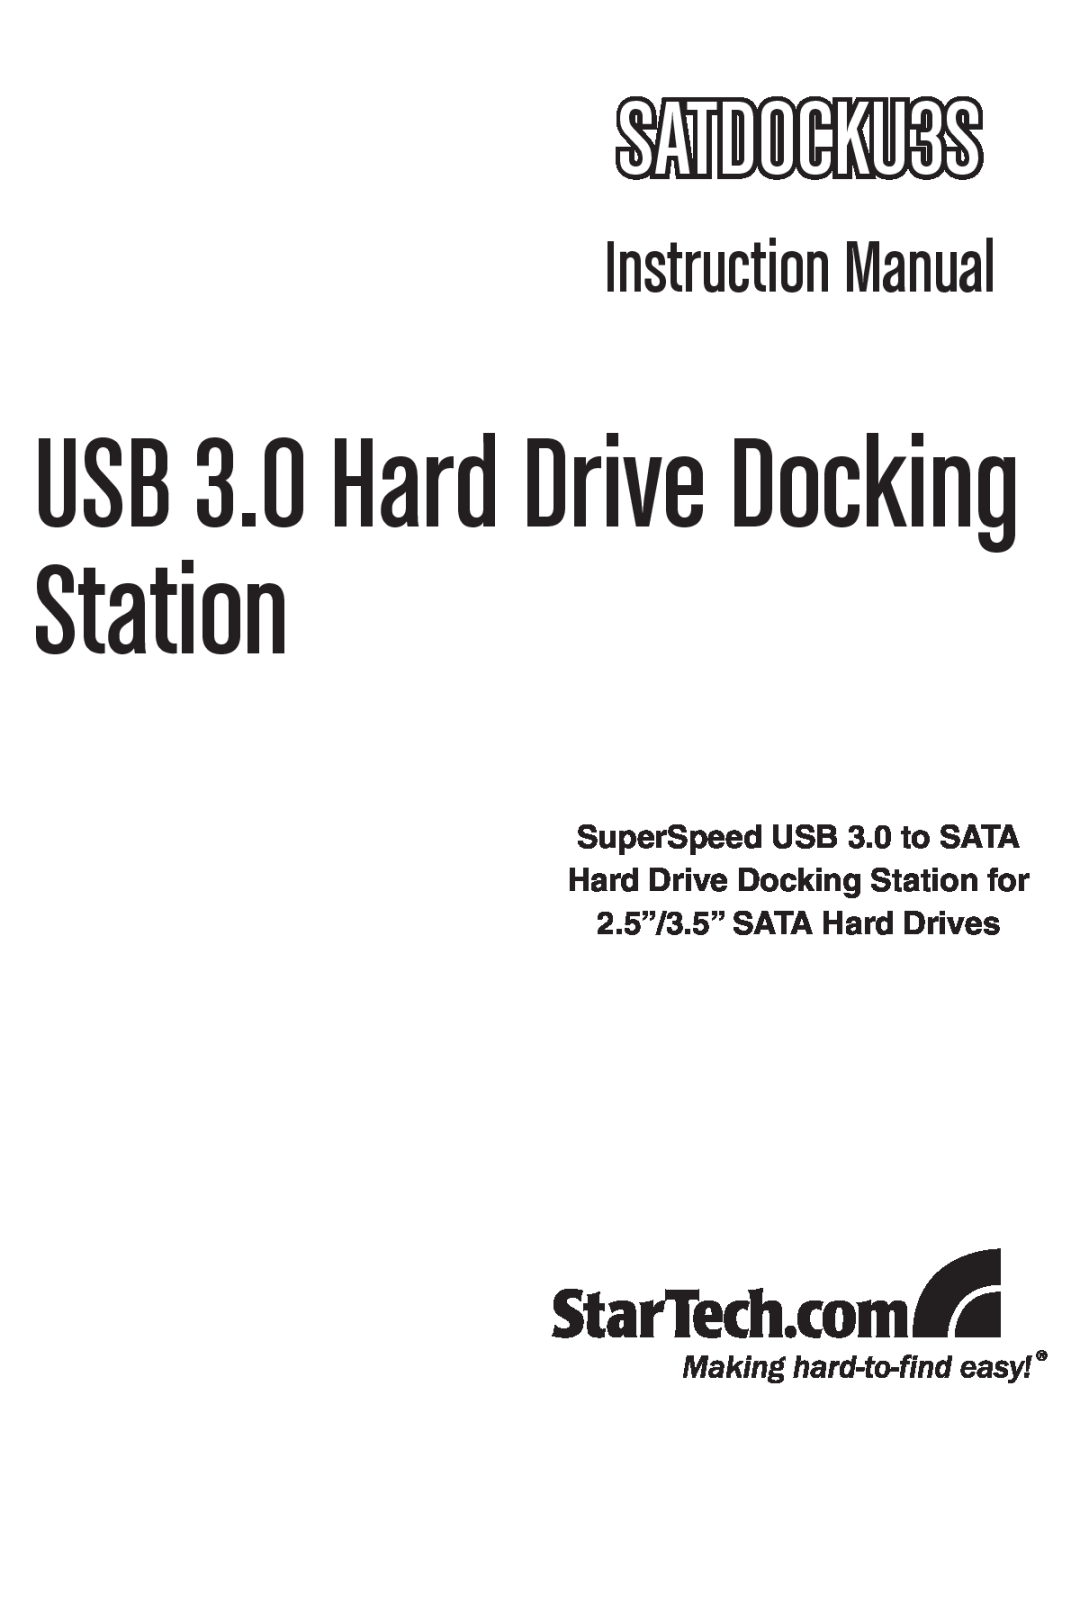 StarTech.com SATDOCKU3S instruction manual USB 3.0 Hard Drive Docking Station, Instruction Manual 